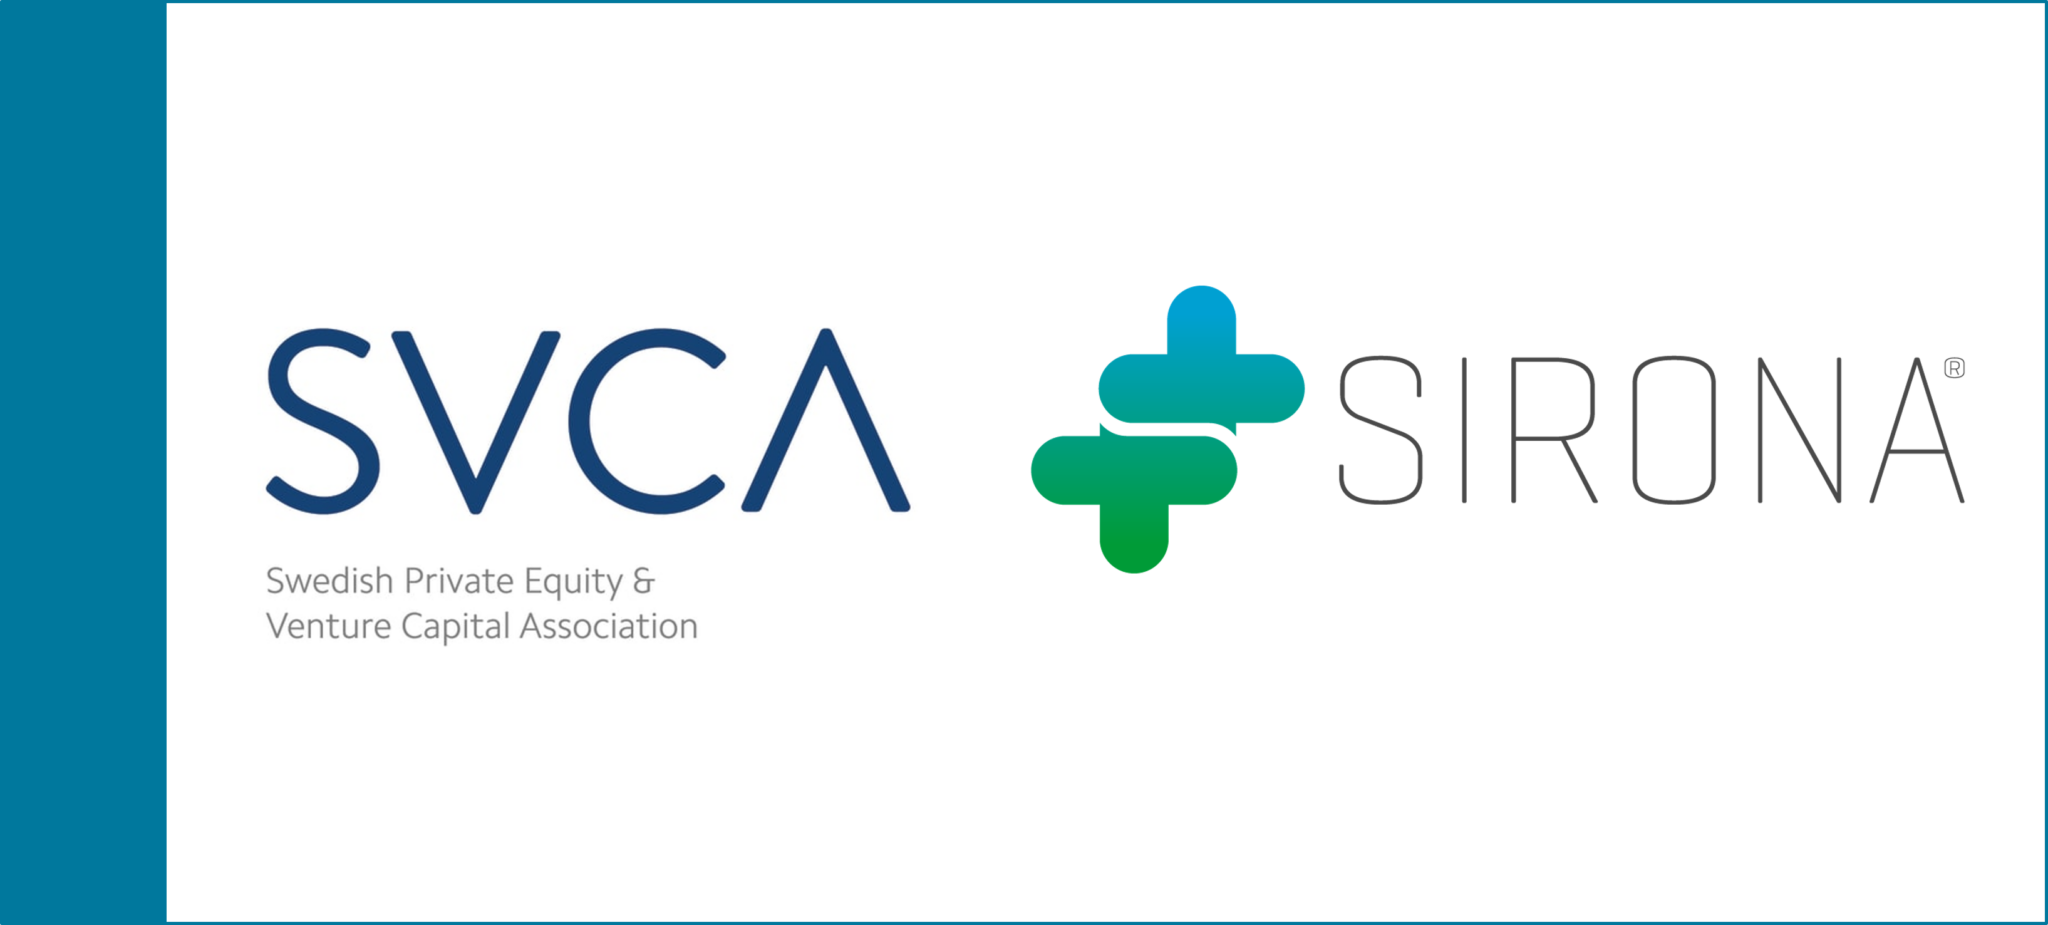 Sirona är nu en associerad medlem i SVCA – Swedish Private Equity & Venture Capital Association